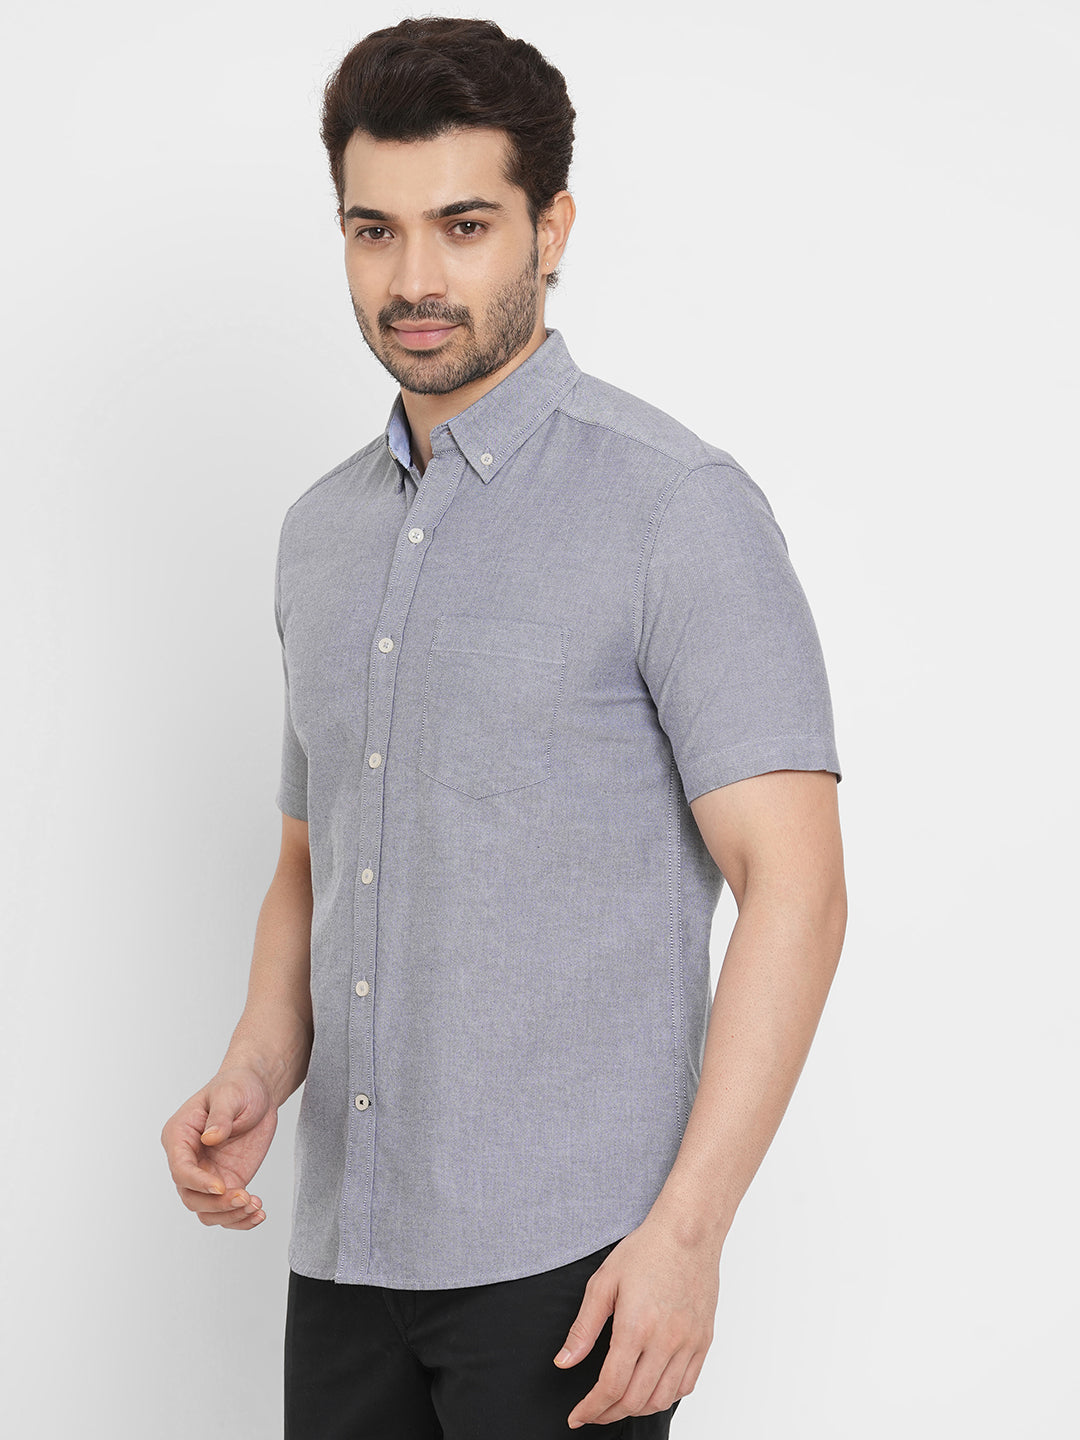 Men's Oxford Cotton Button Down Collar Short Sleeved Shirt - Grey